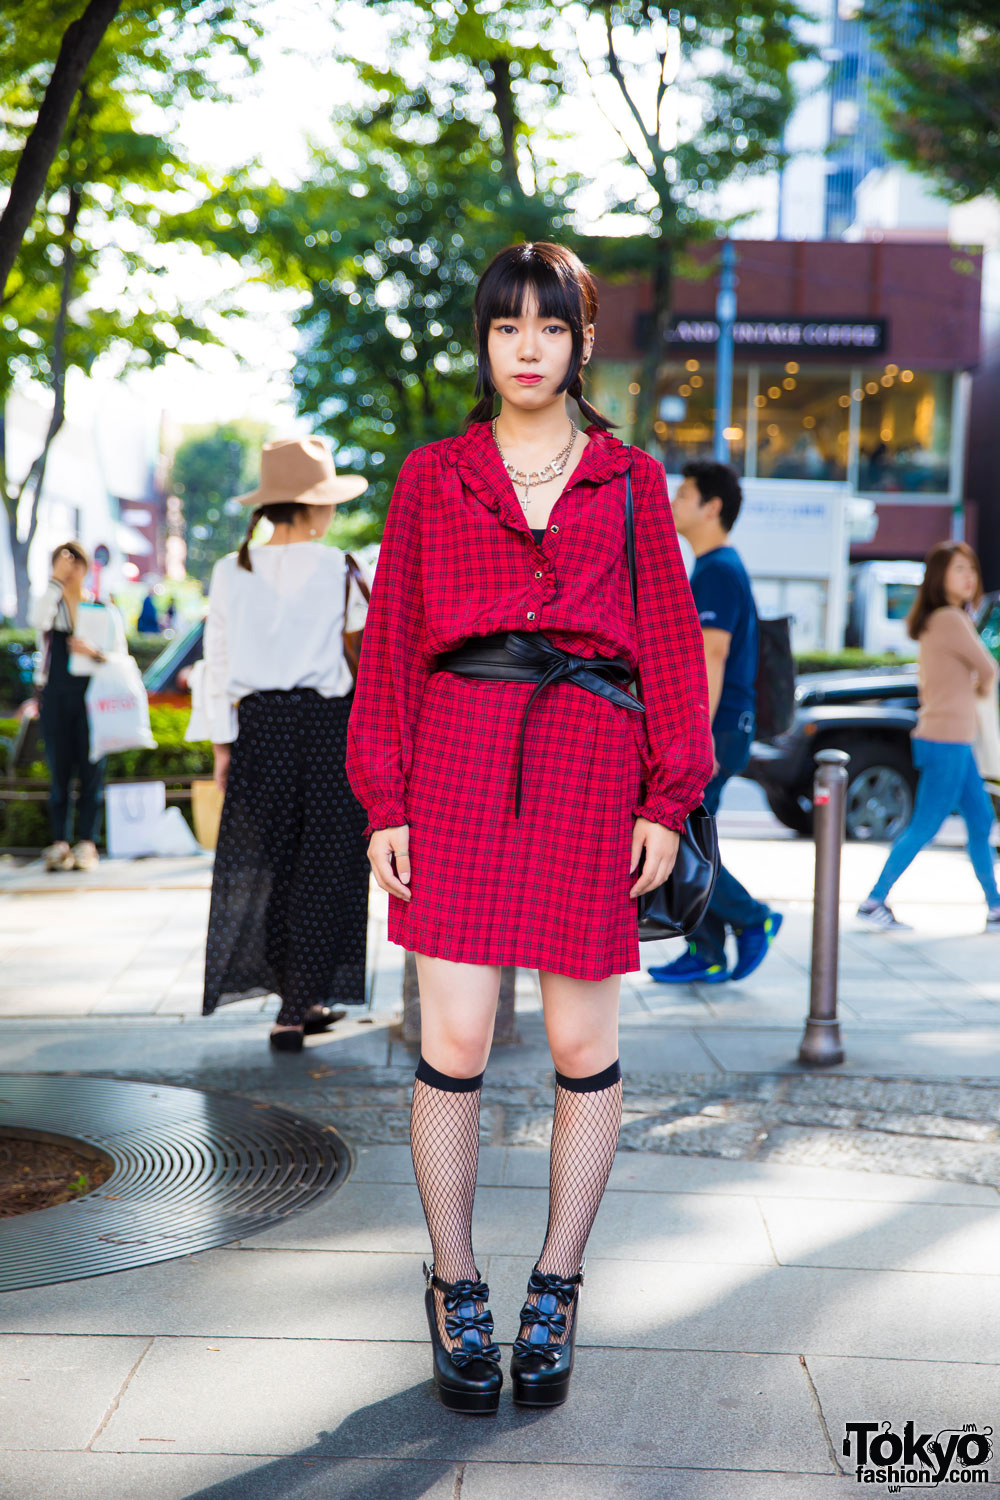 Harajuku Girl in Plaid Dress, Fishnet Socks & Platform Bow Shoes